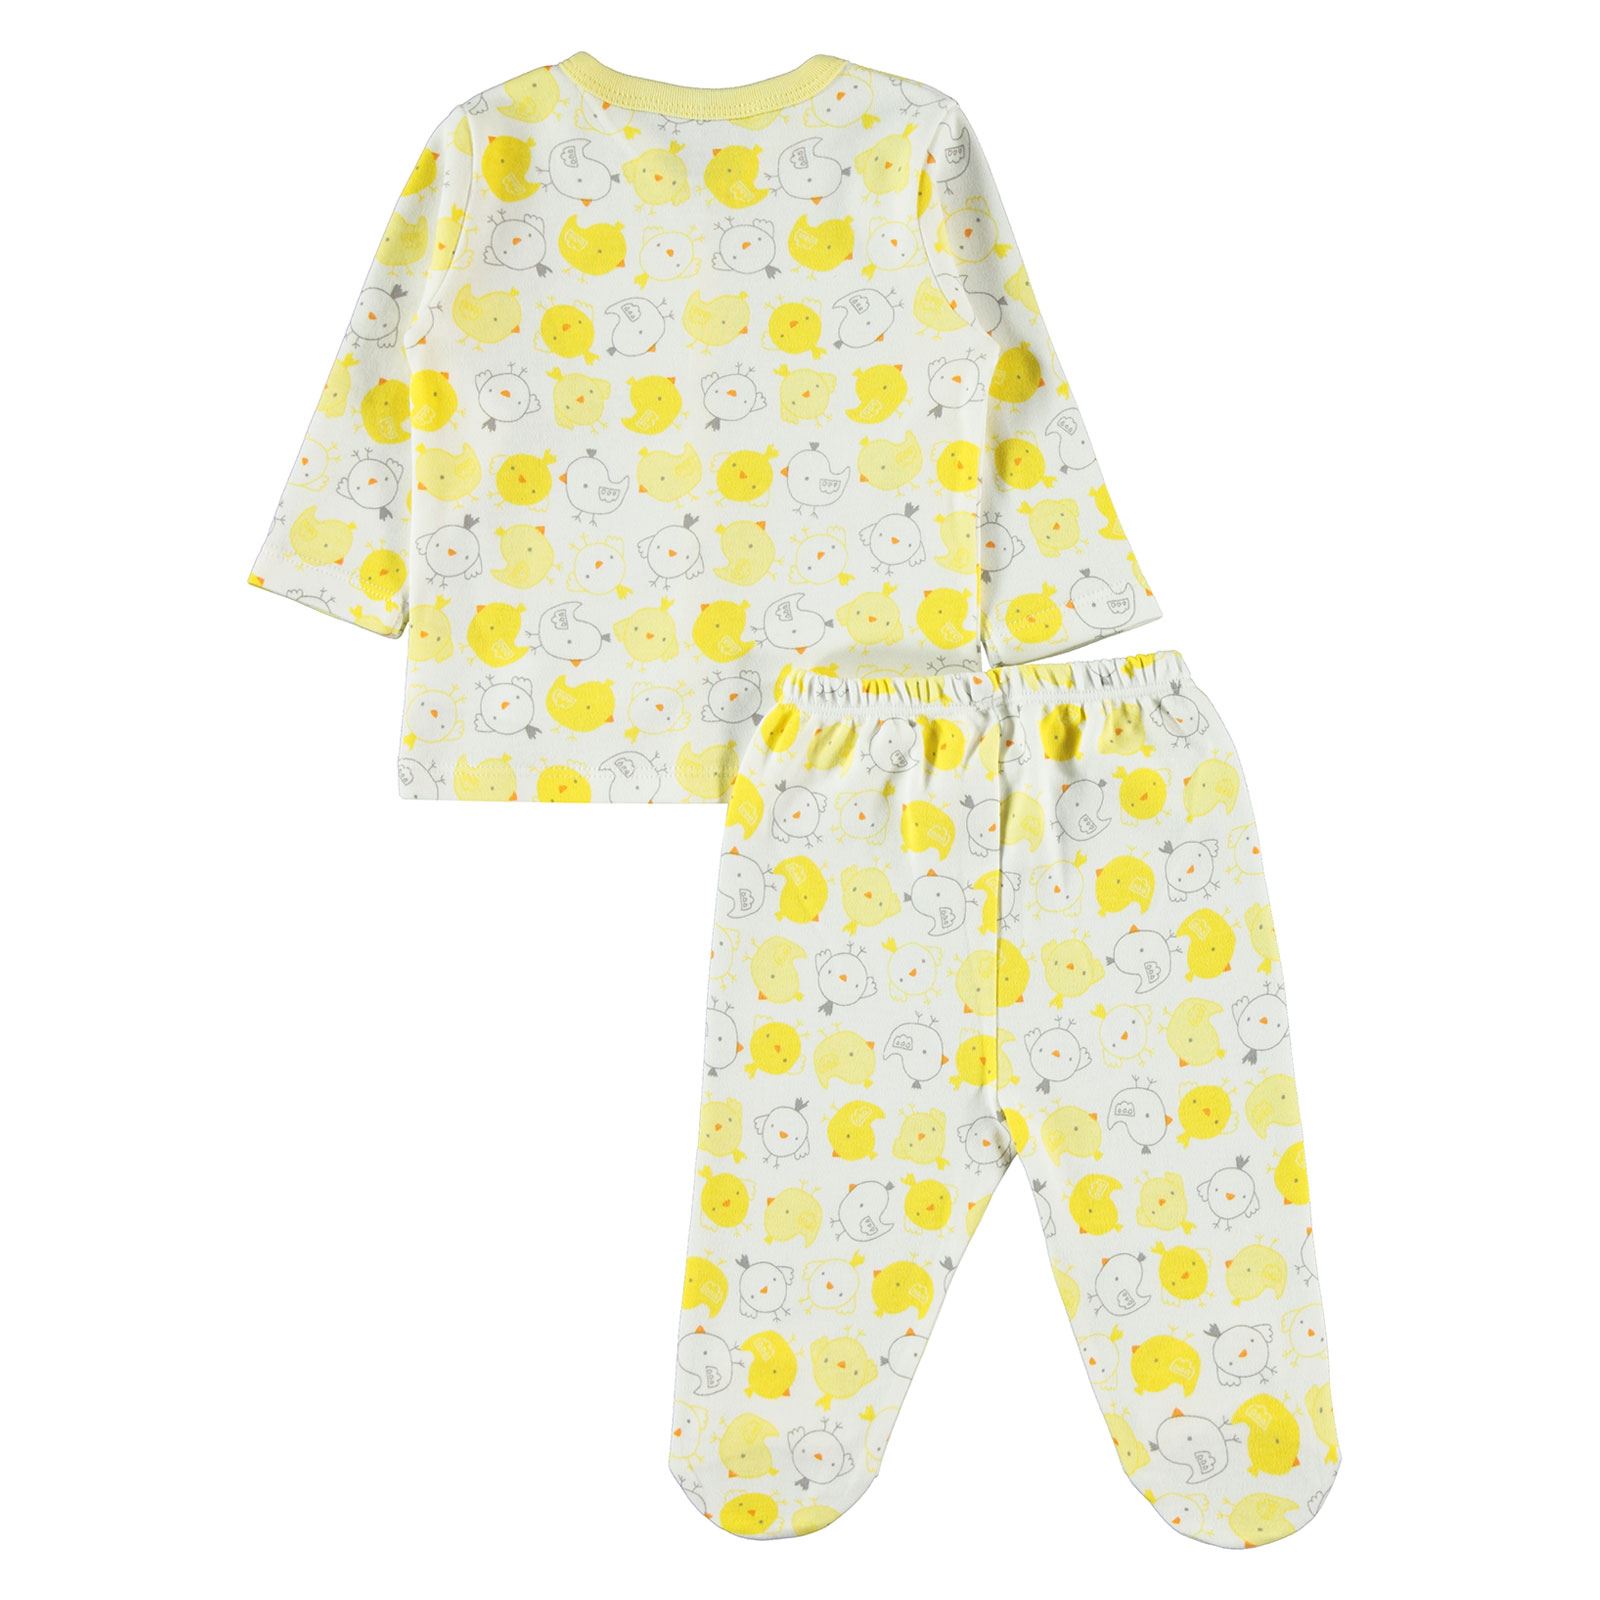 Kujju Bebek Pijama Takımı 3-6 Ay Sarı